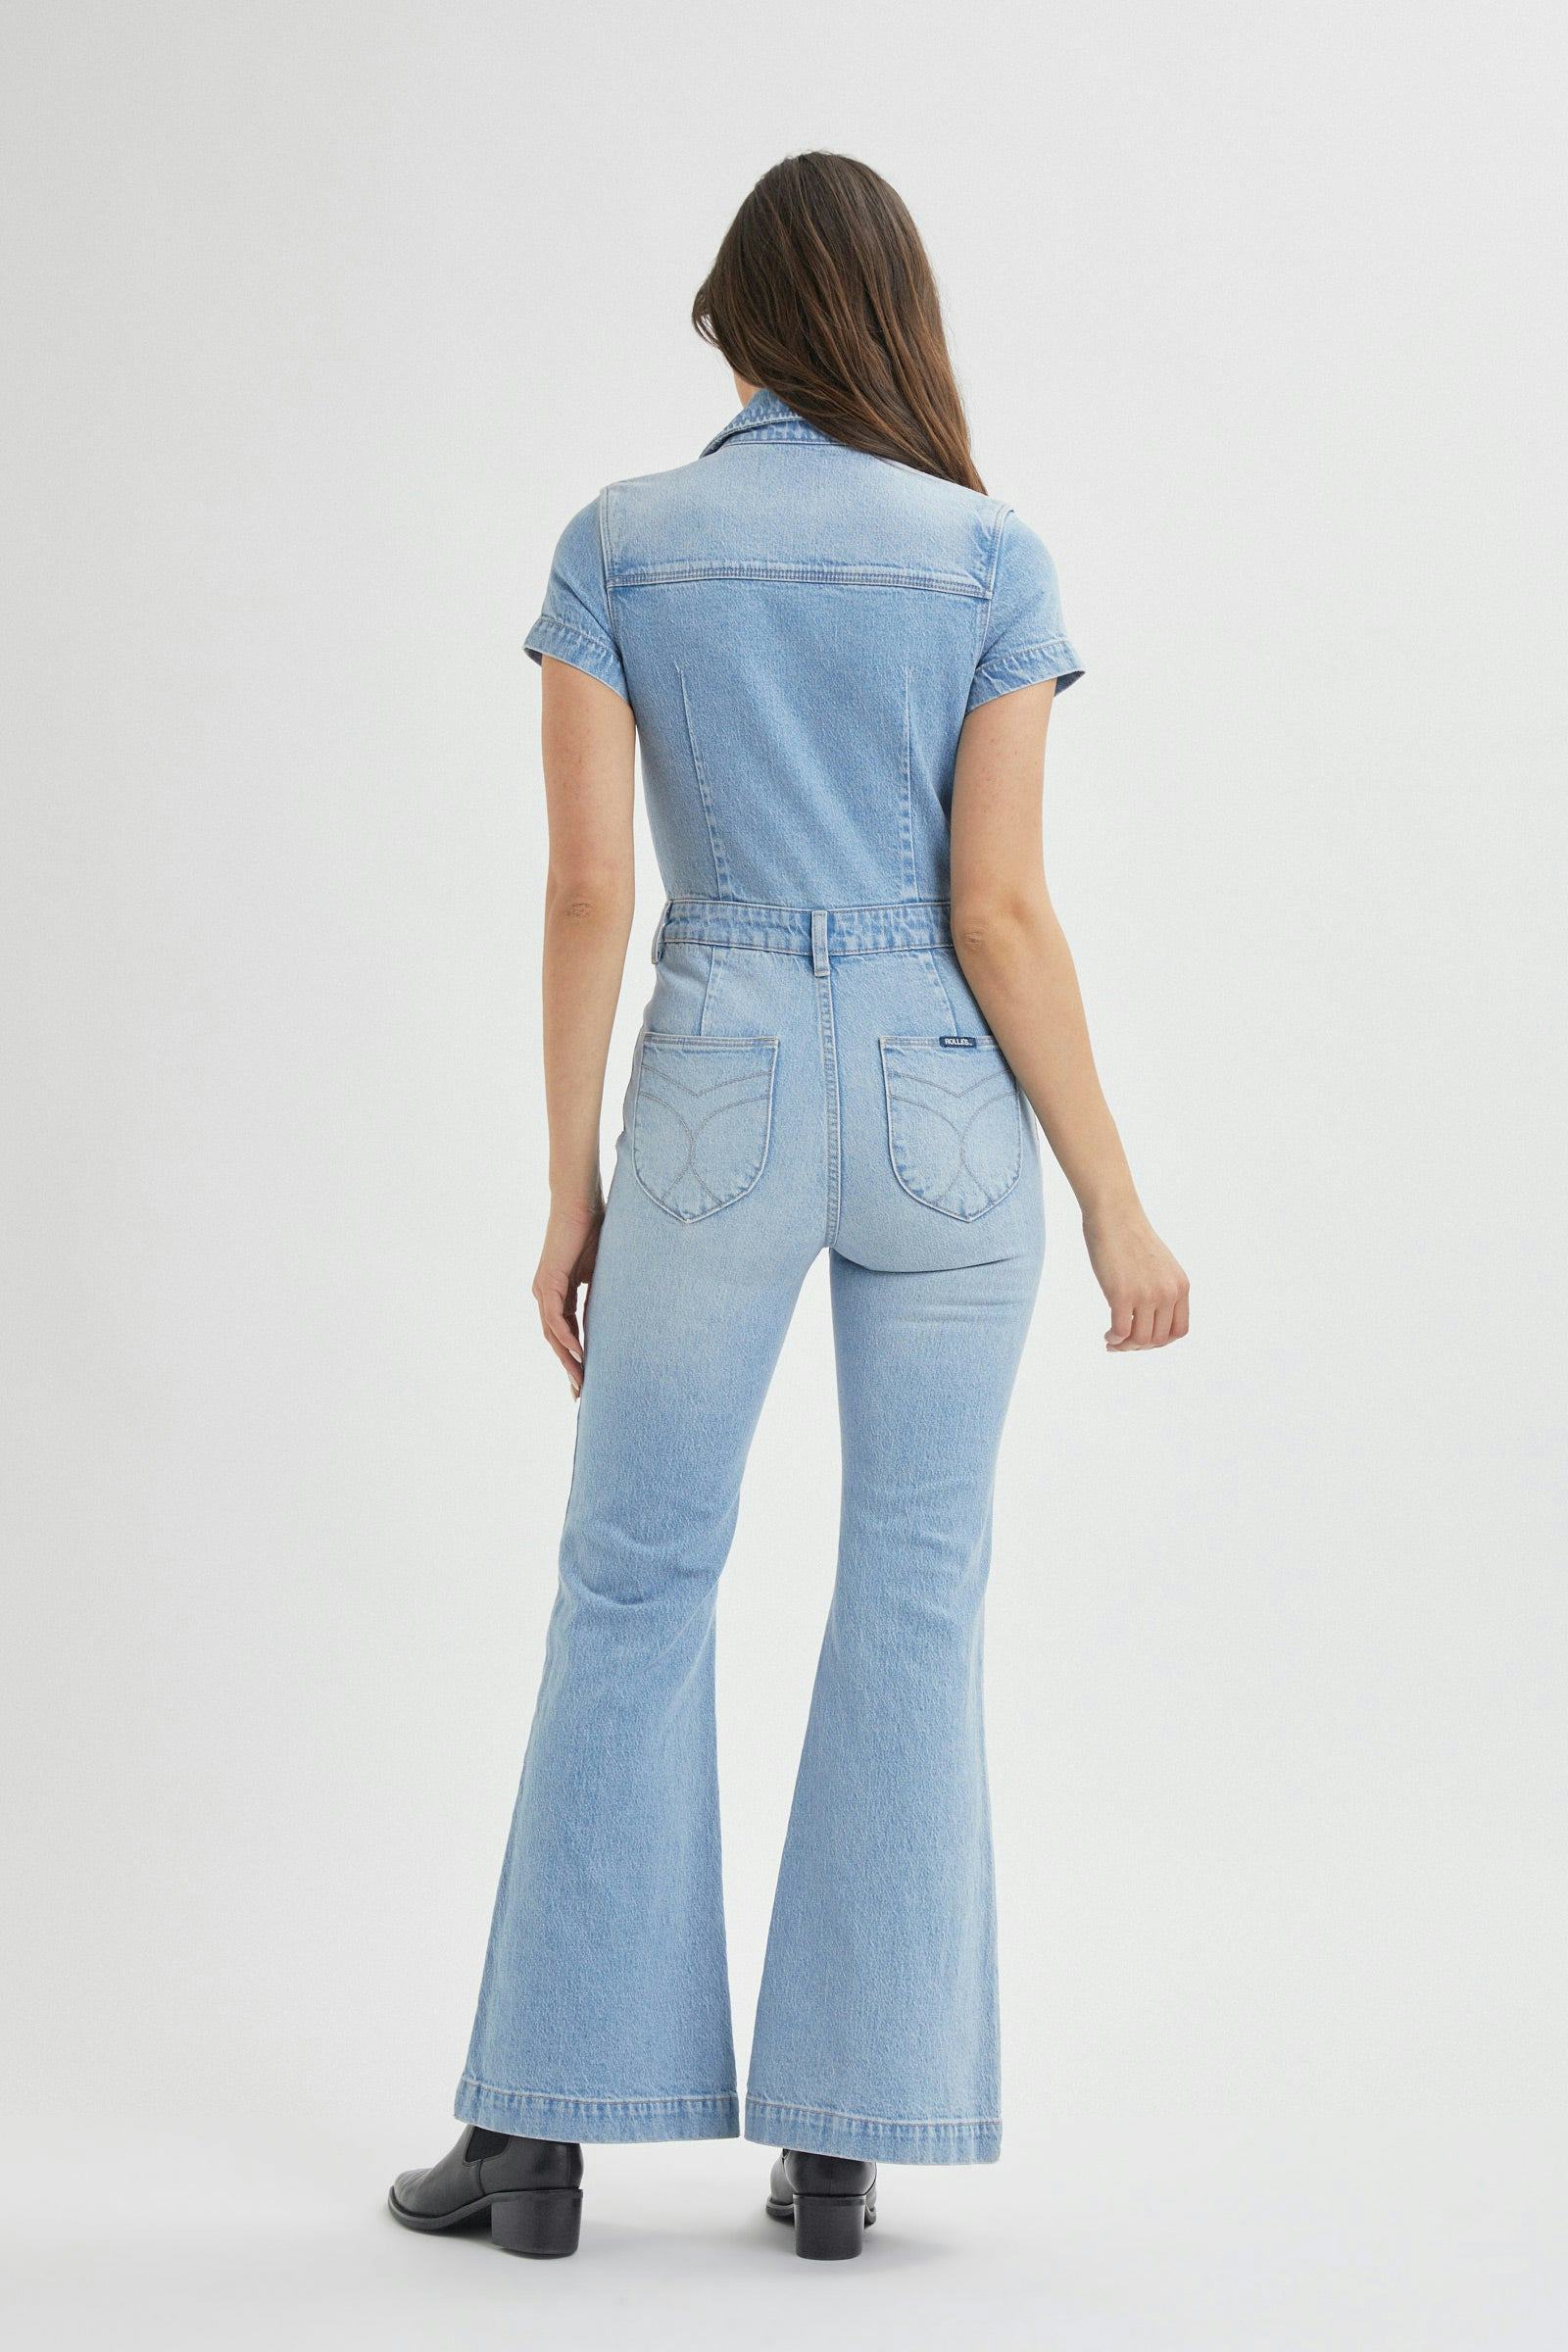 Buy Eastcoast Flare Jumpsuit - Sunshine Online | Rollas Jeans